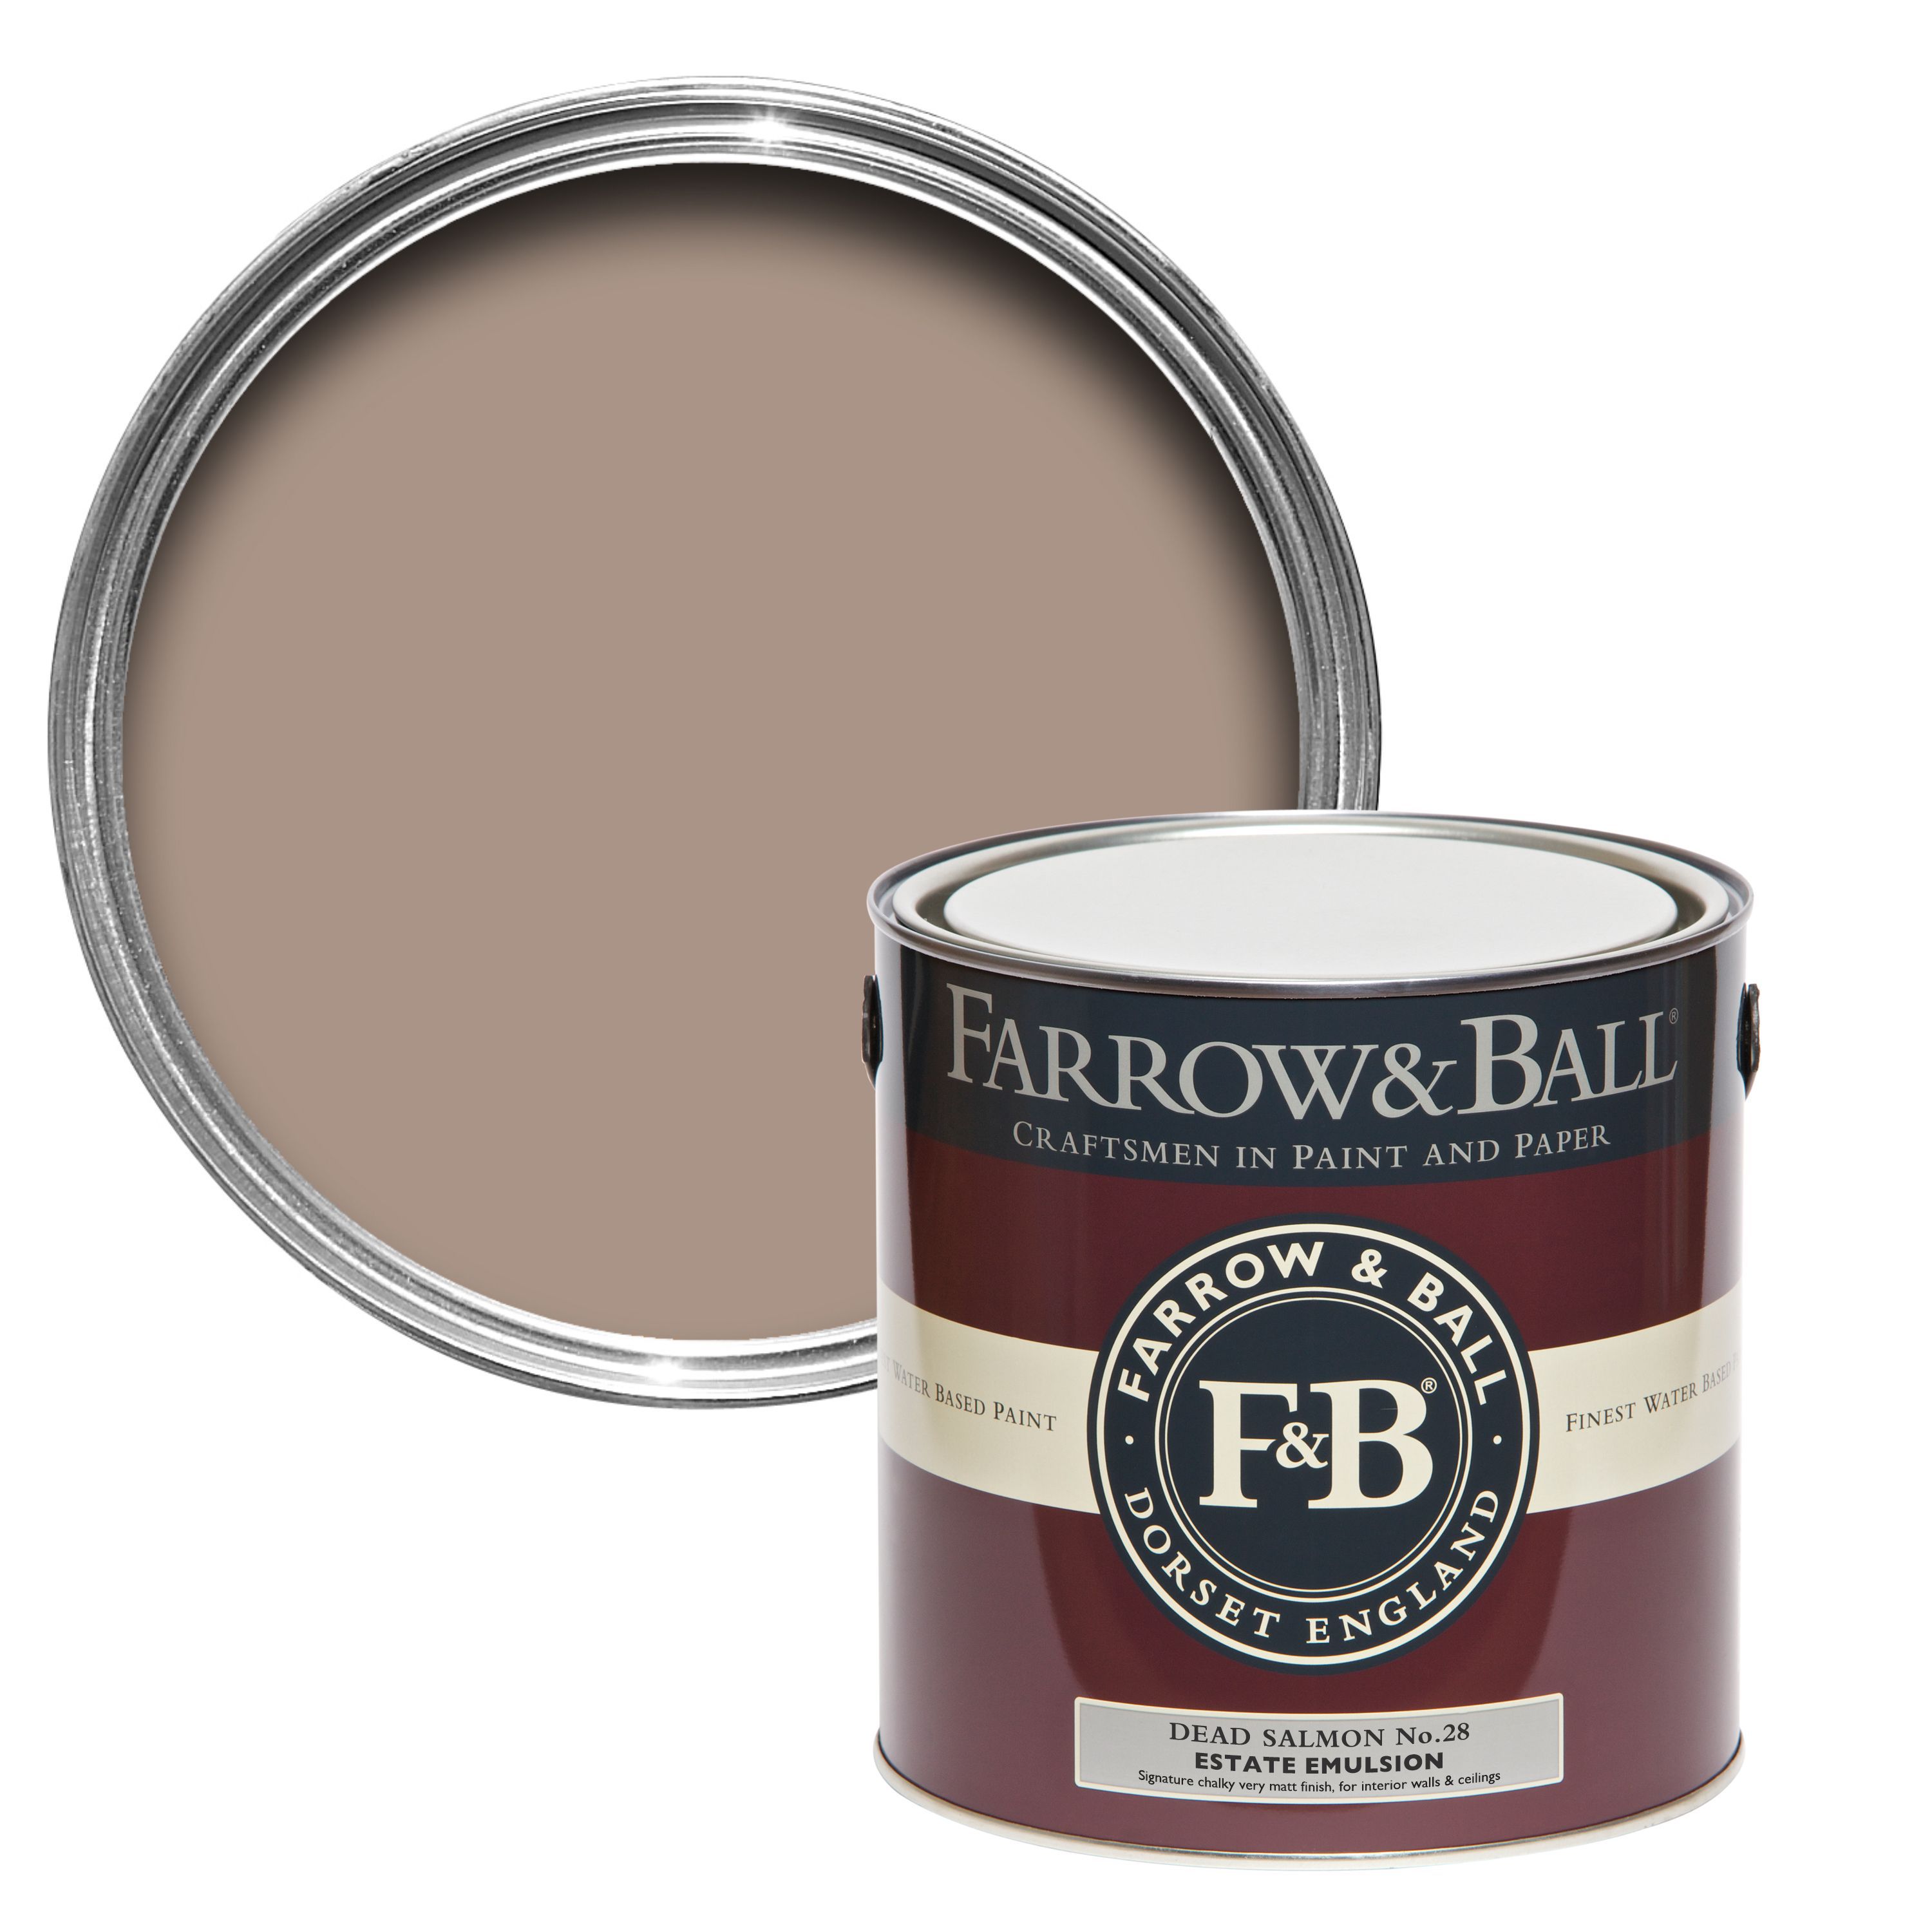 Farrow & Ball Estate Dead salmon No.28 Matt Emulsion paint, 2.5L Tester pot